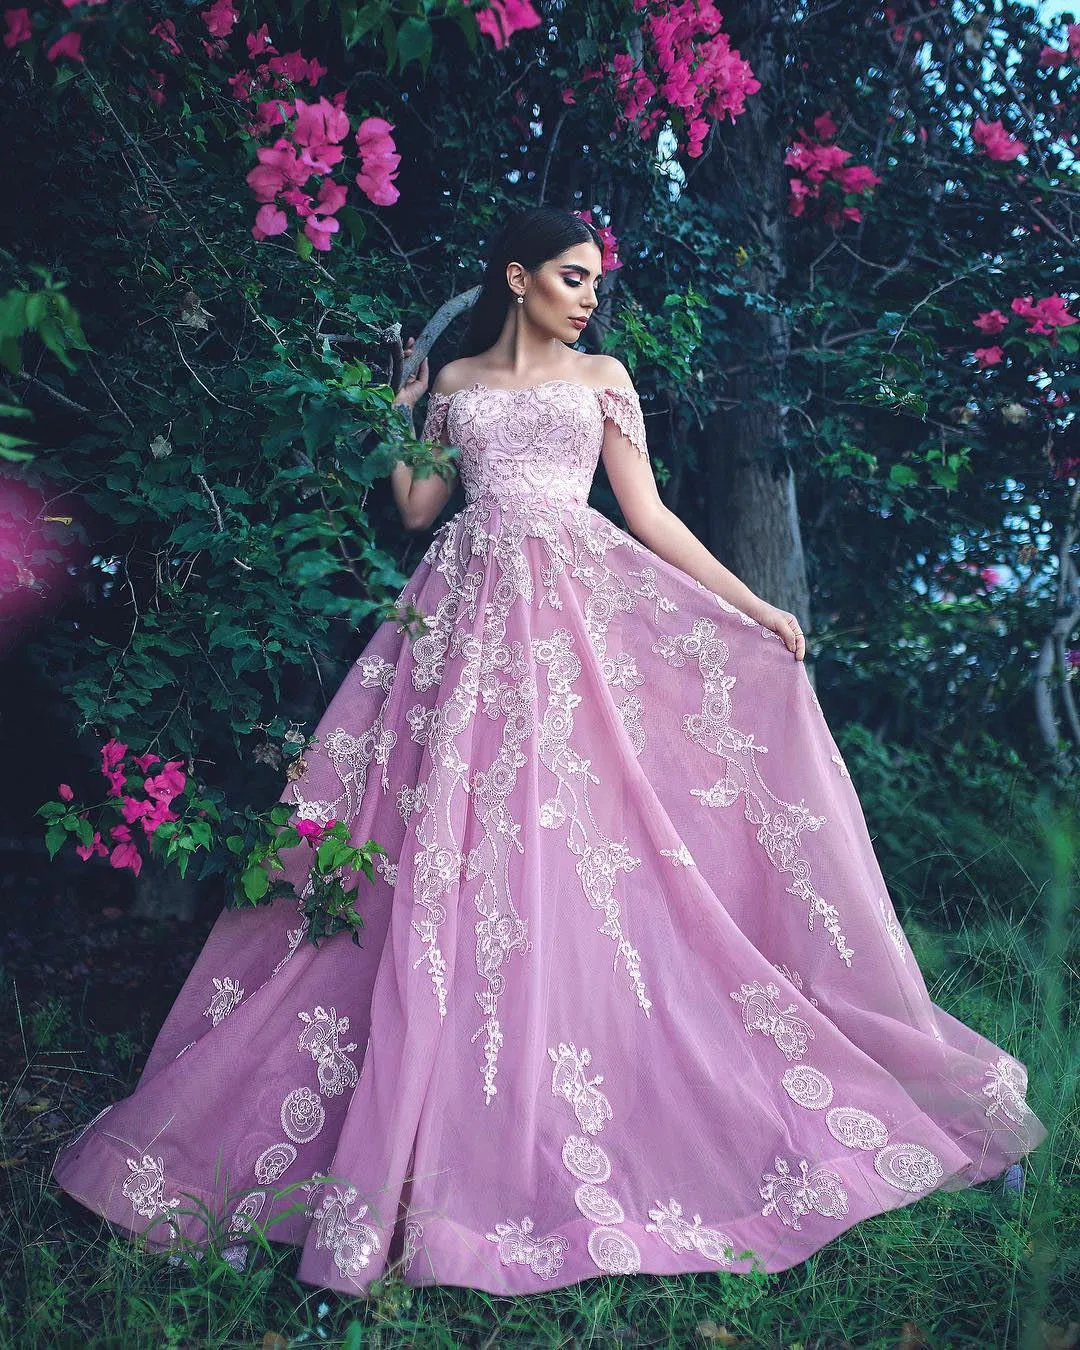 Pink Graden Sexy A Line Prom 2019 Off Shoulder Lace Applique Dresses Evening Wear Special Ocn Dress Vestidos De Fiesta pplique